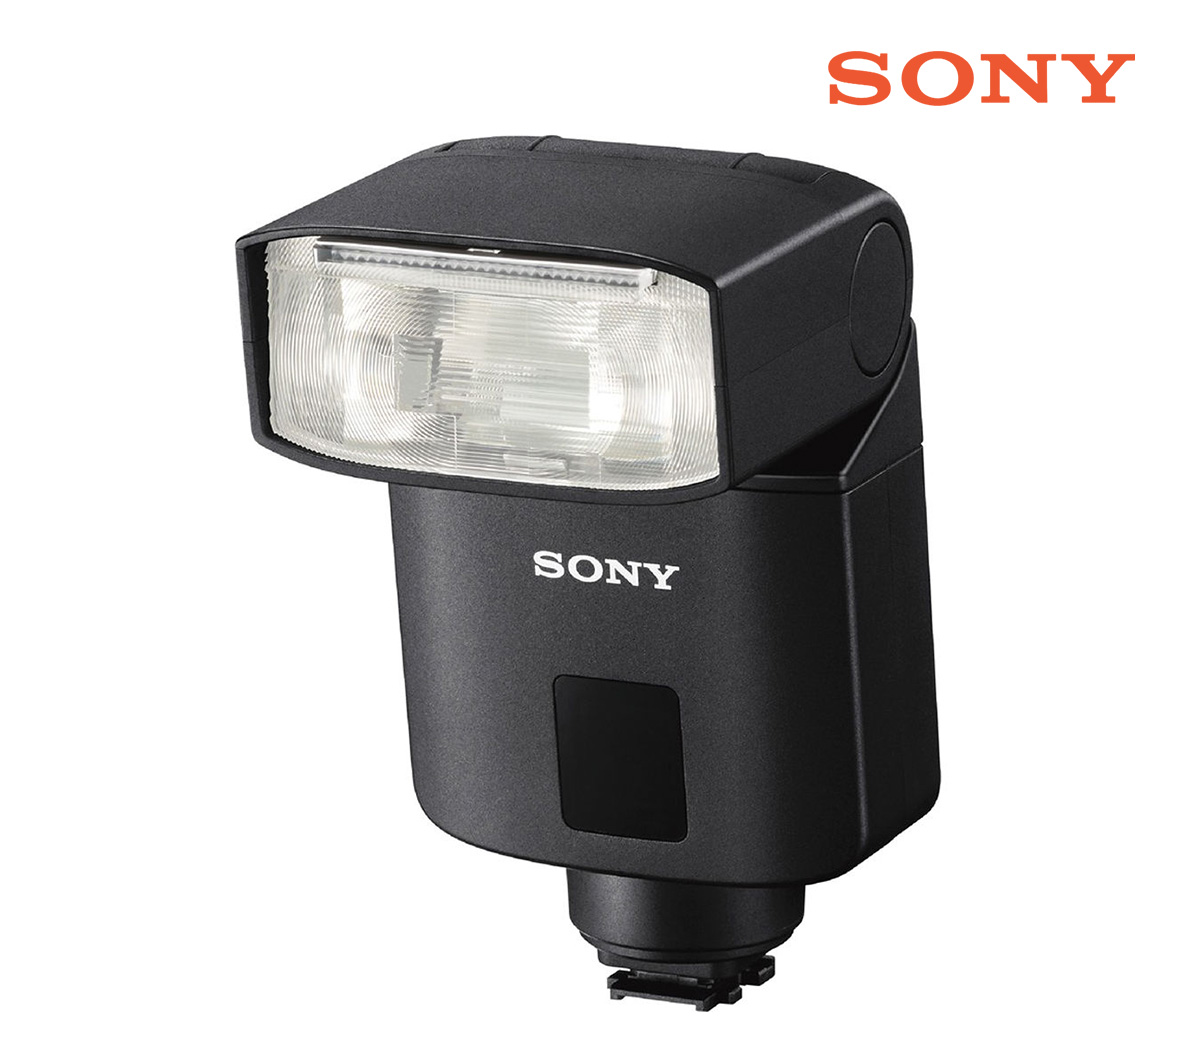 Sony HVLF32M External Flash